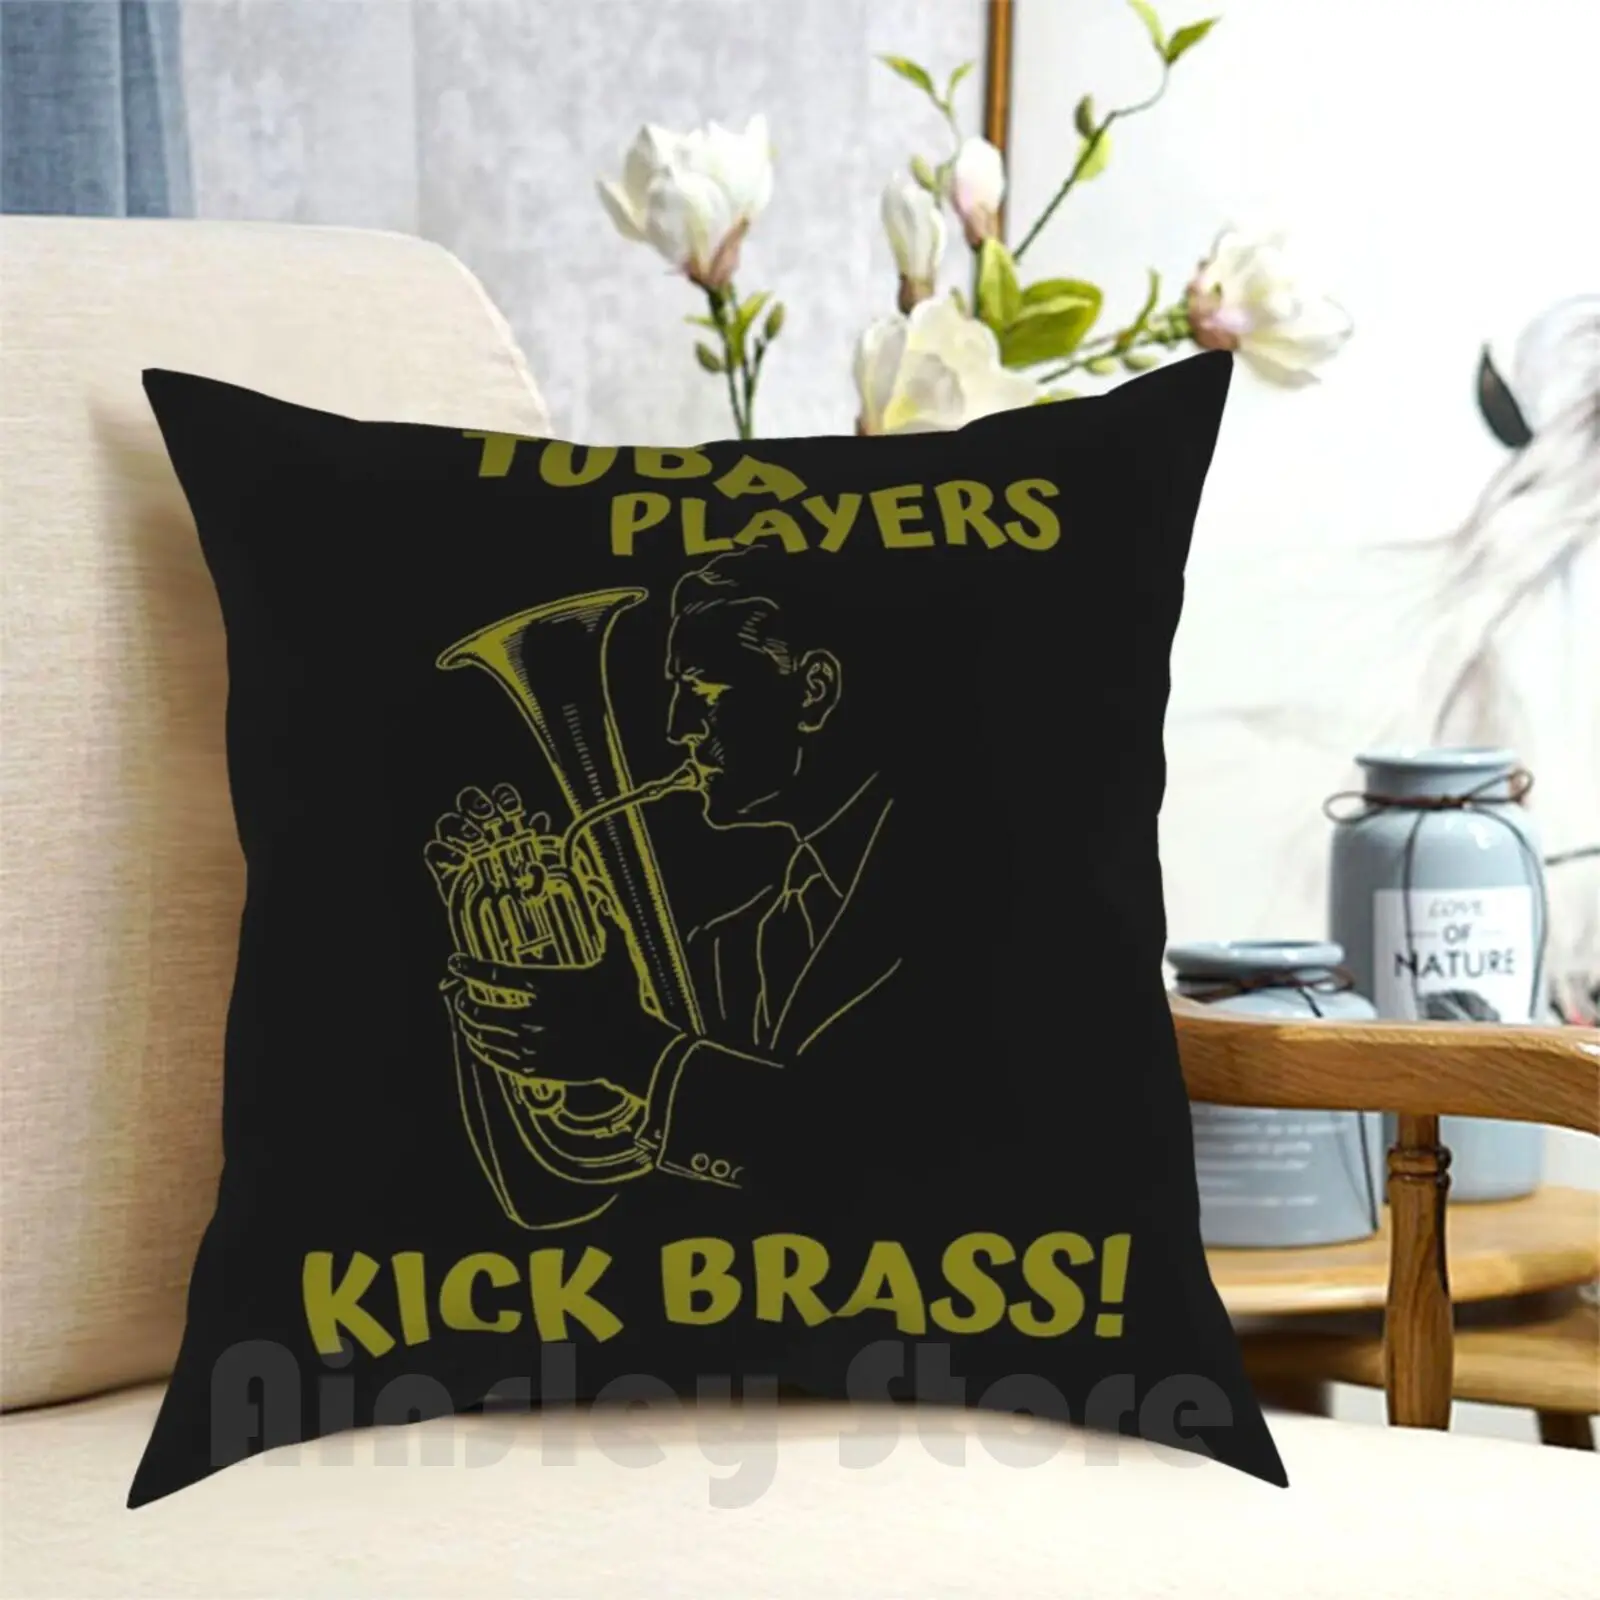 

Tuba Players Kick Brass Pillow Case Printed Home Soft Throw Pillow Tuba Music Musician Marching Band Brass Band Band